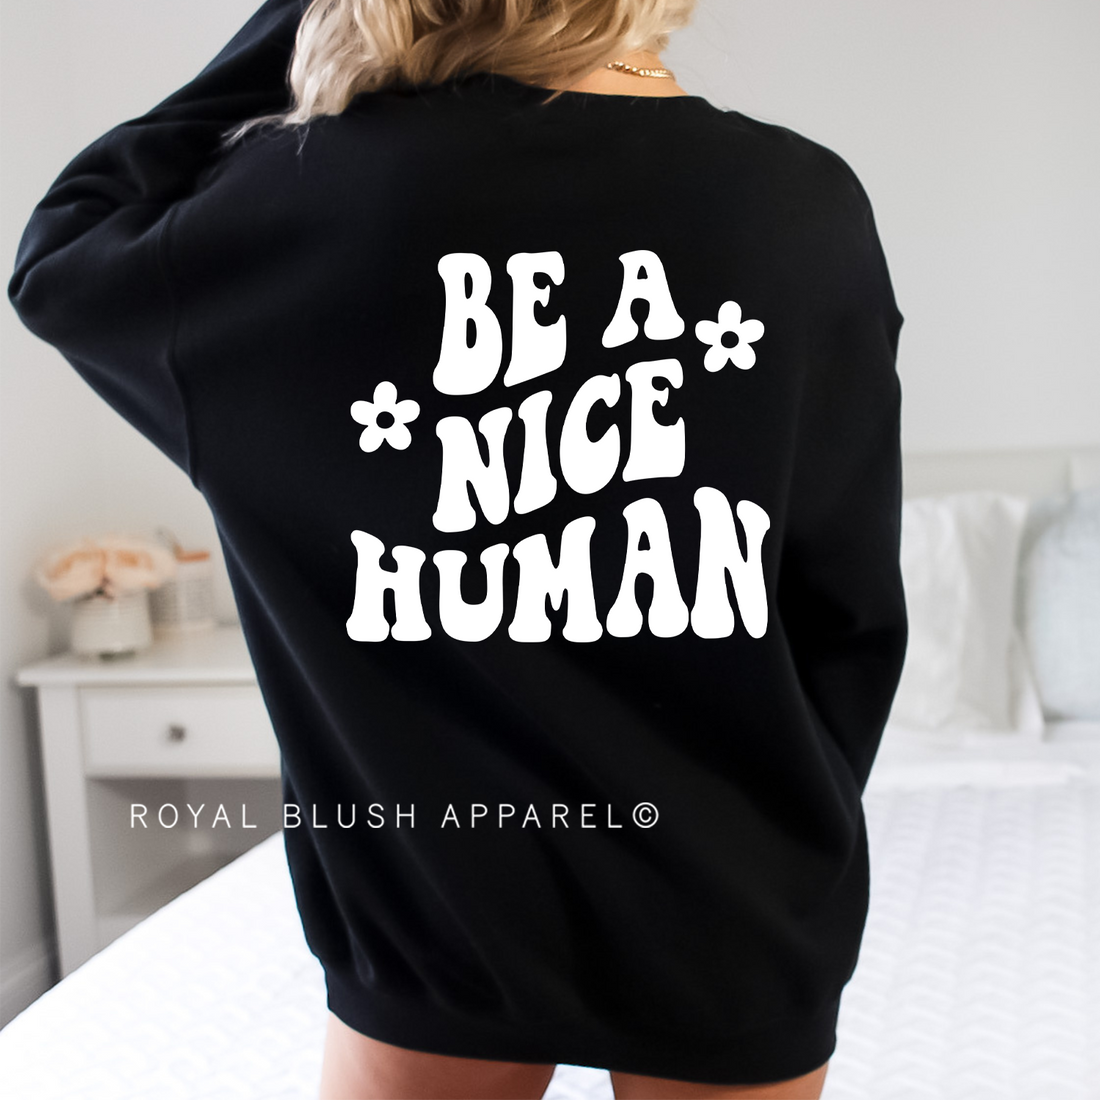 Be A Nice Human Sweatshirt